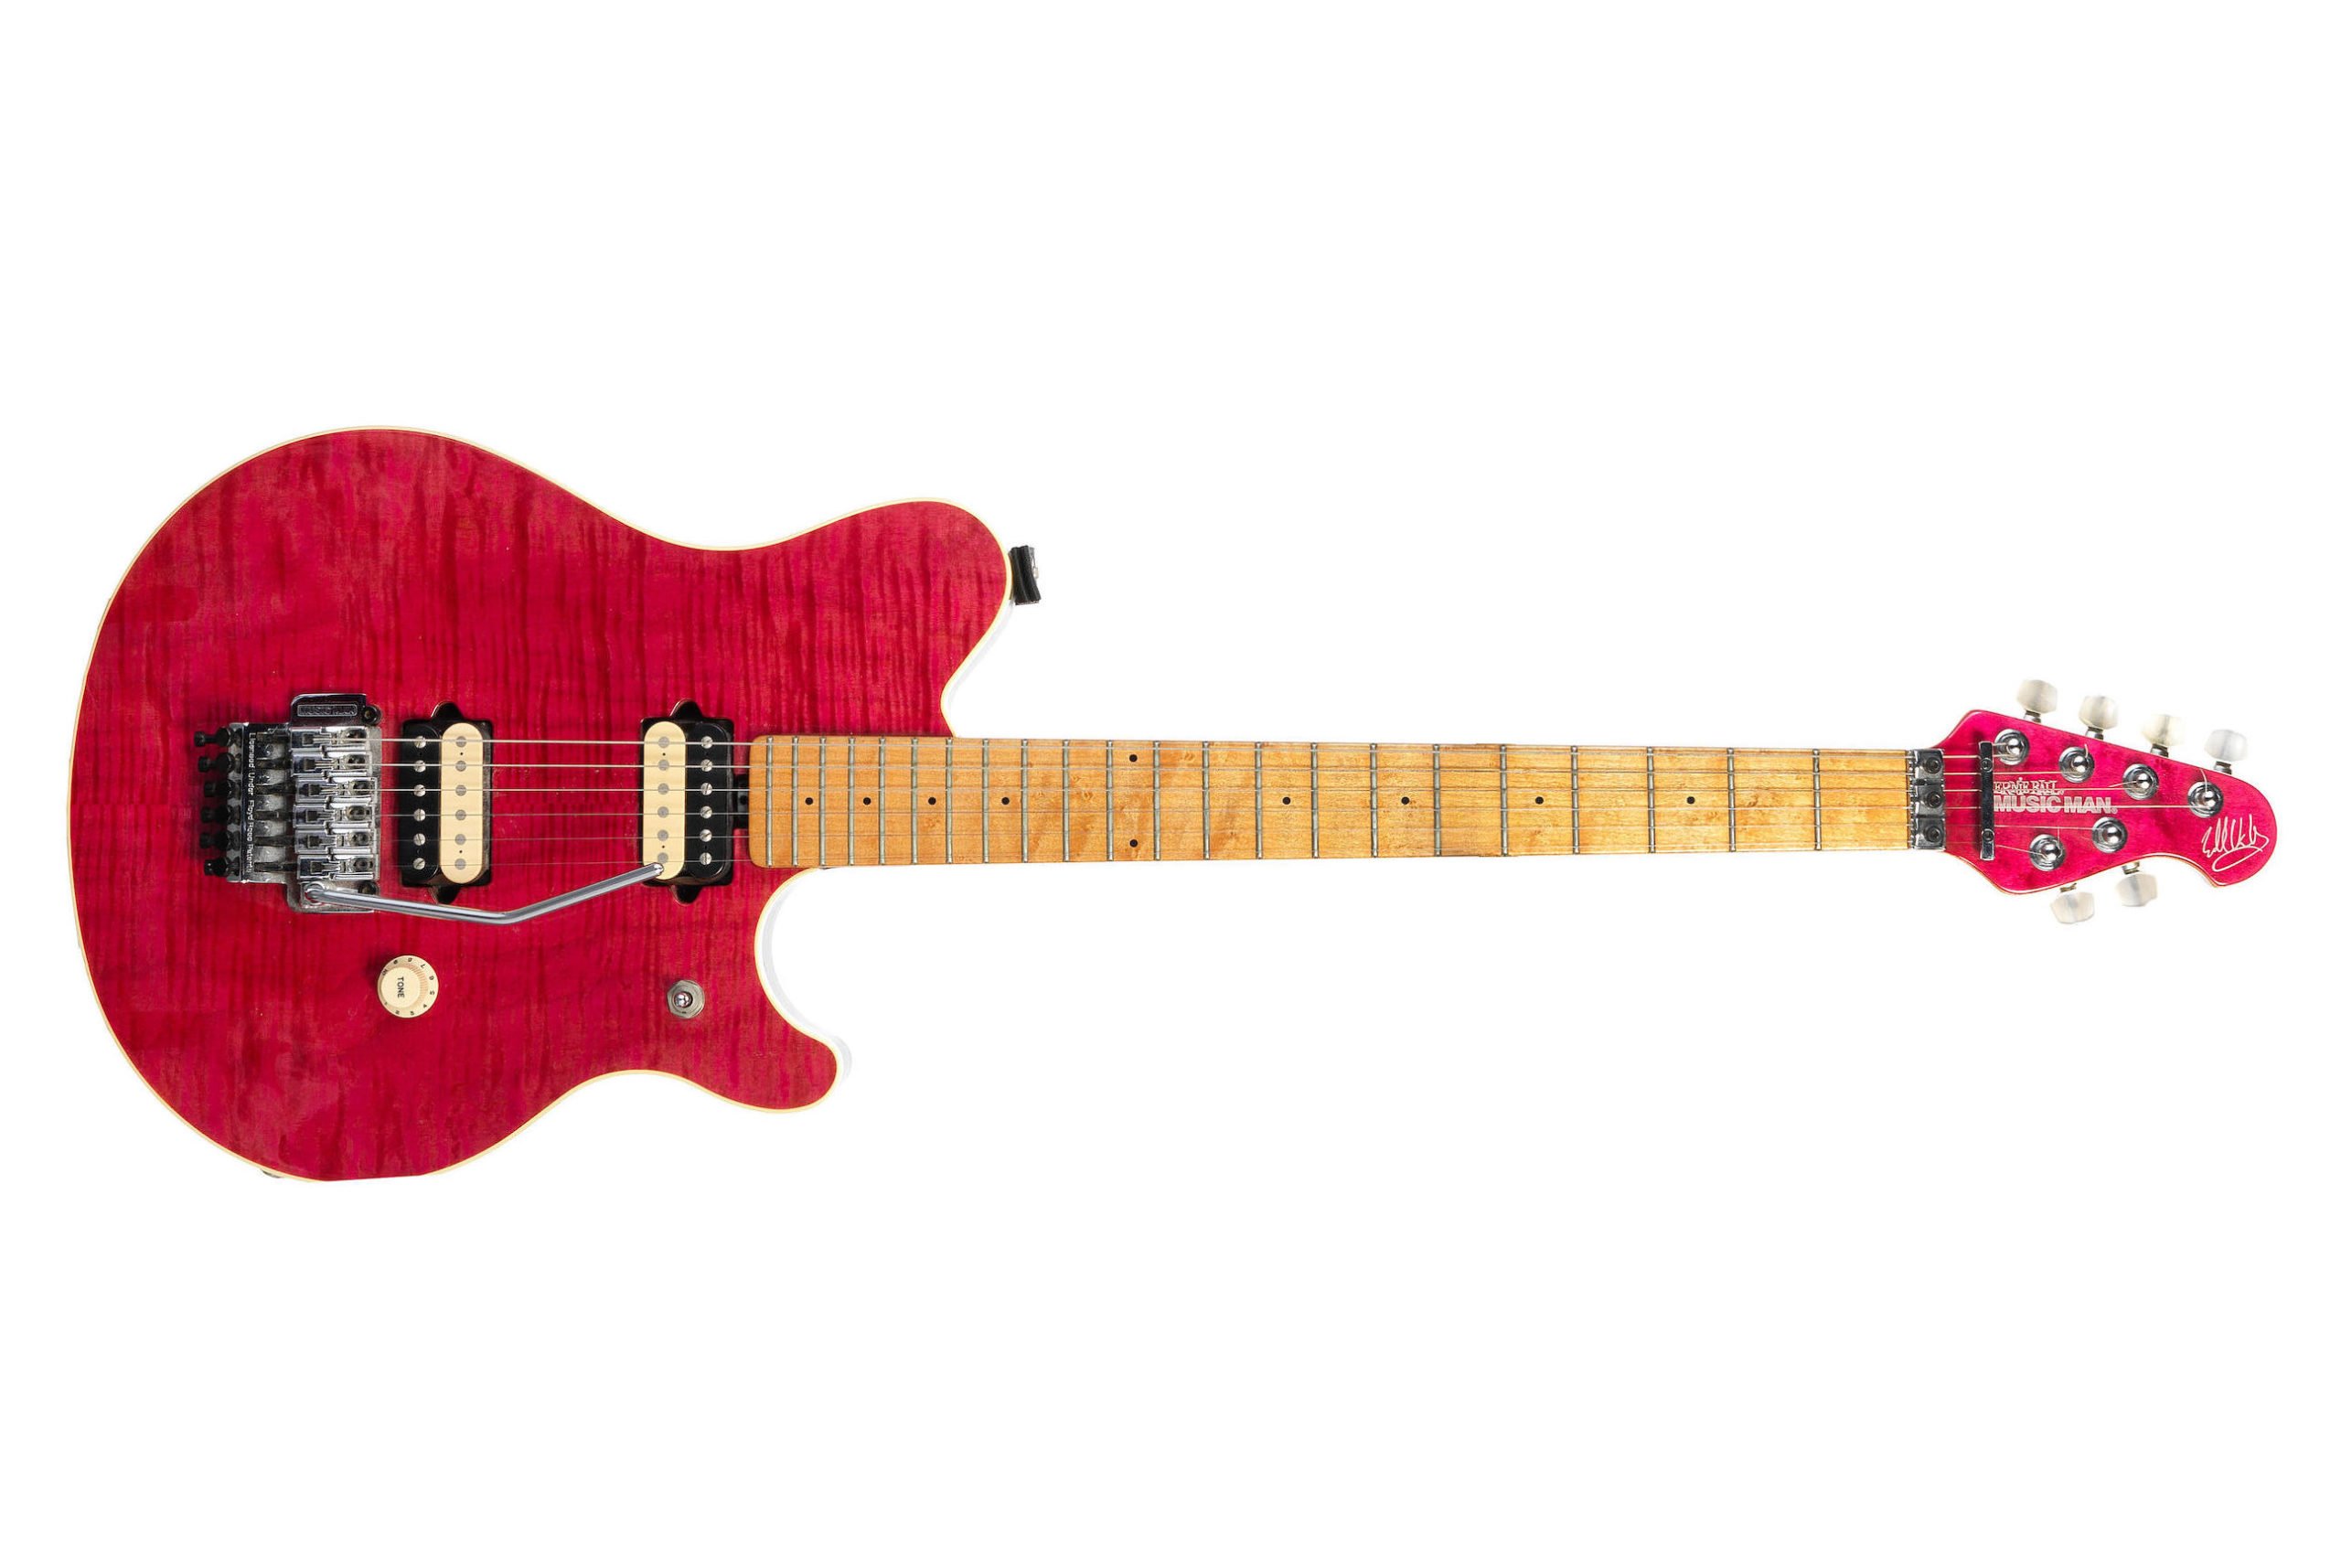 The Guitar Eddie Van Halen Played With Black Sabbath Is For Sale via @Silodrome